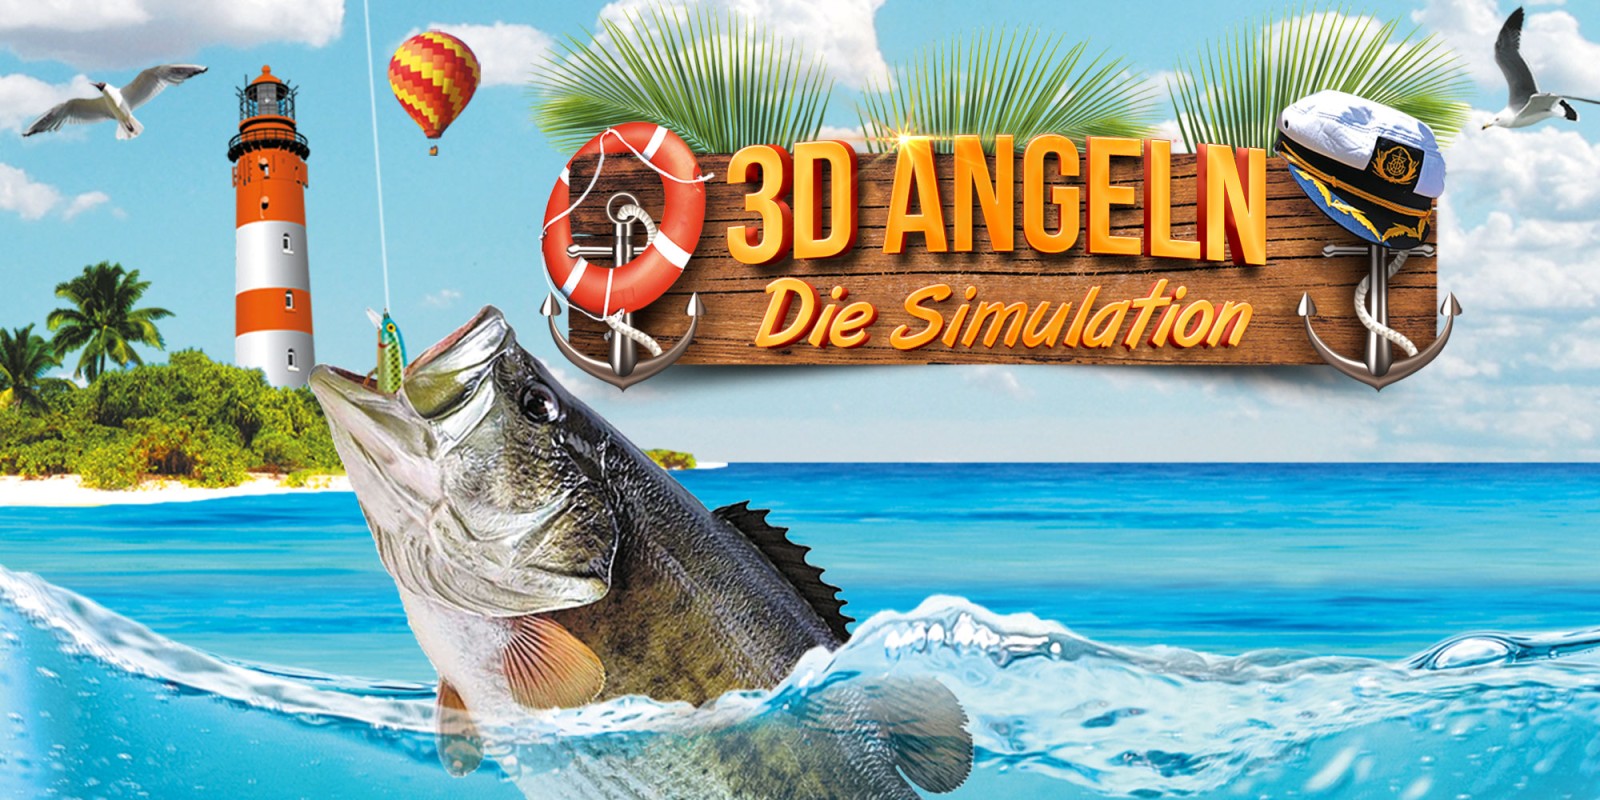 3D Arcade Fishing